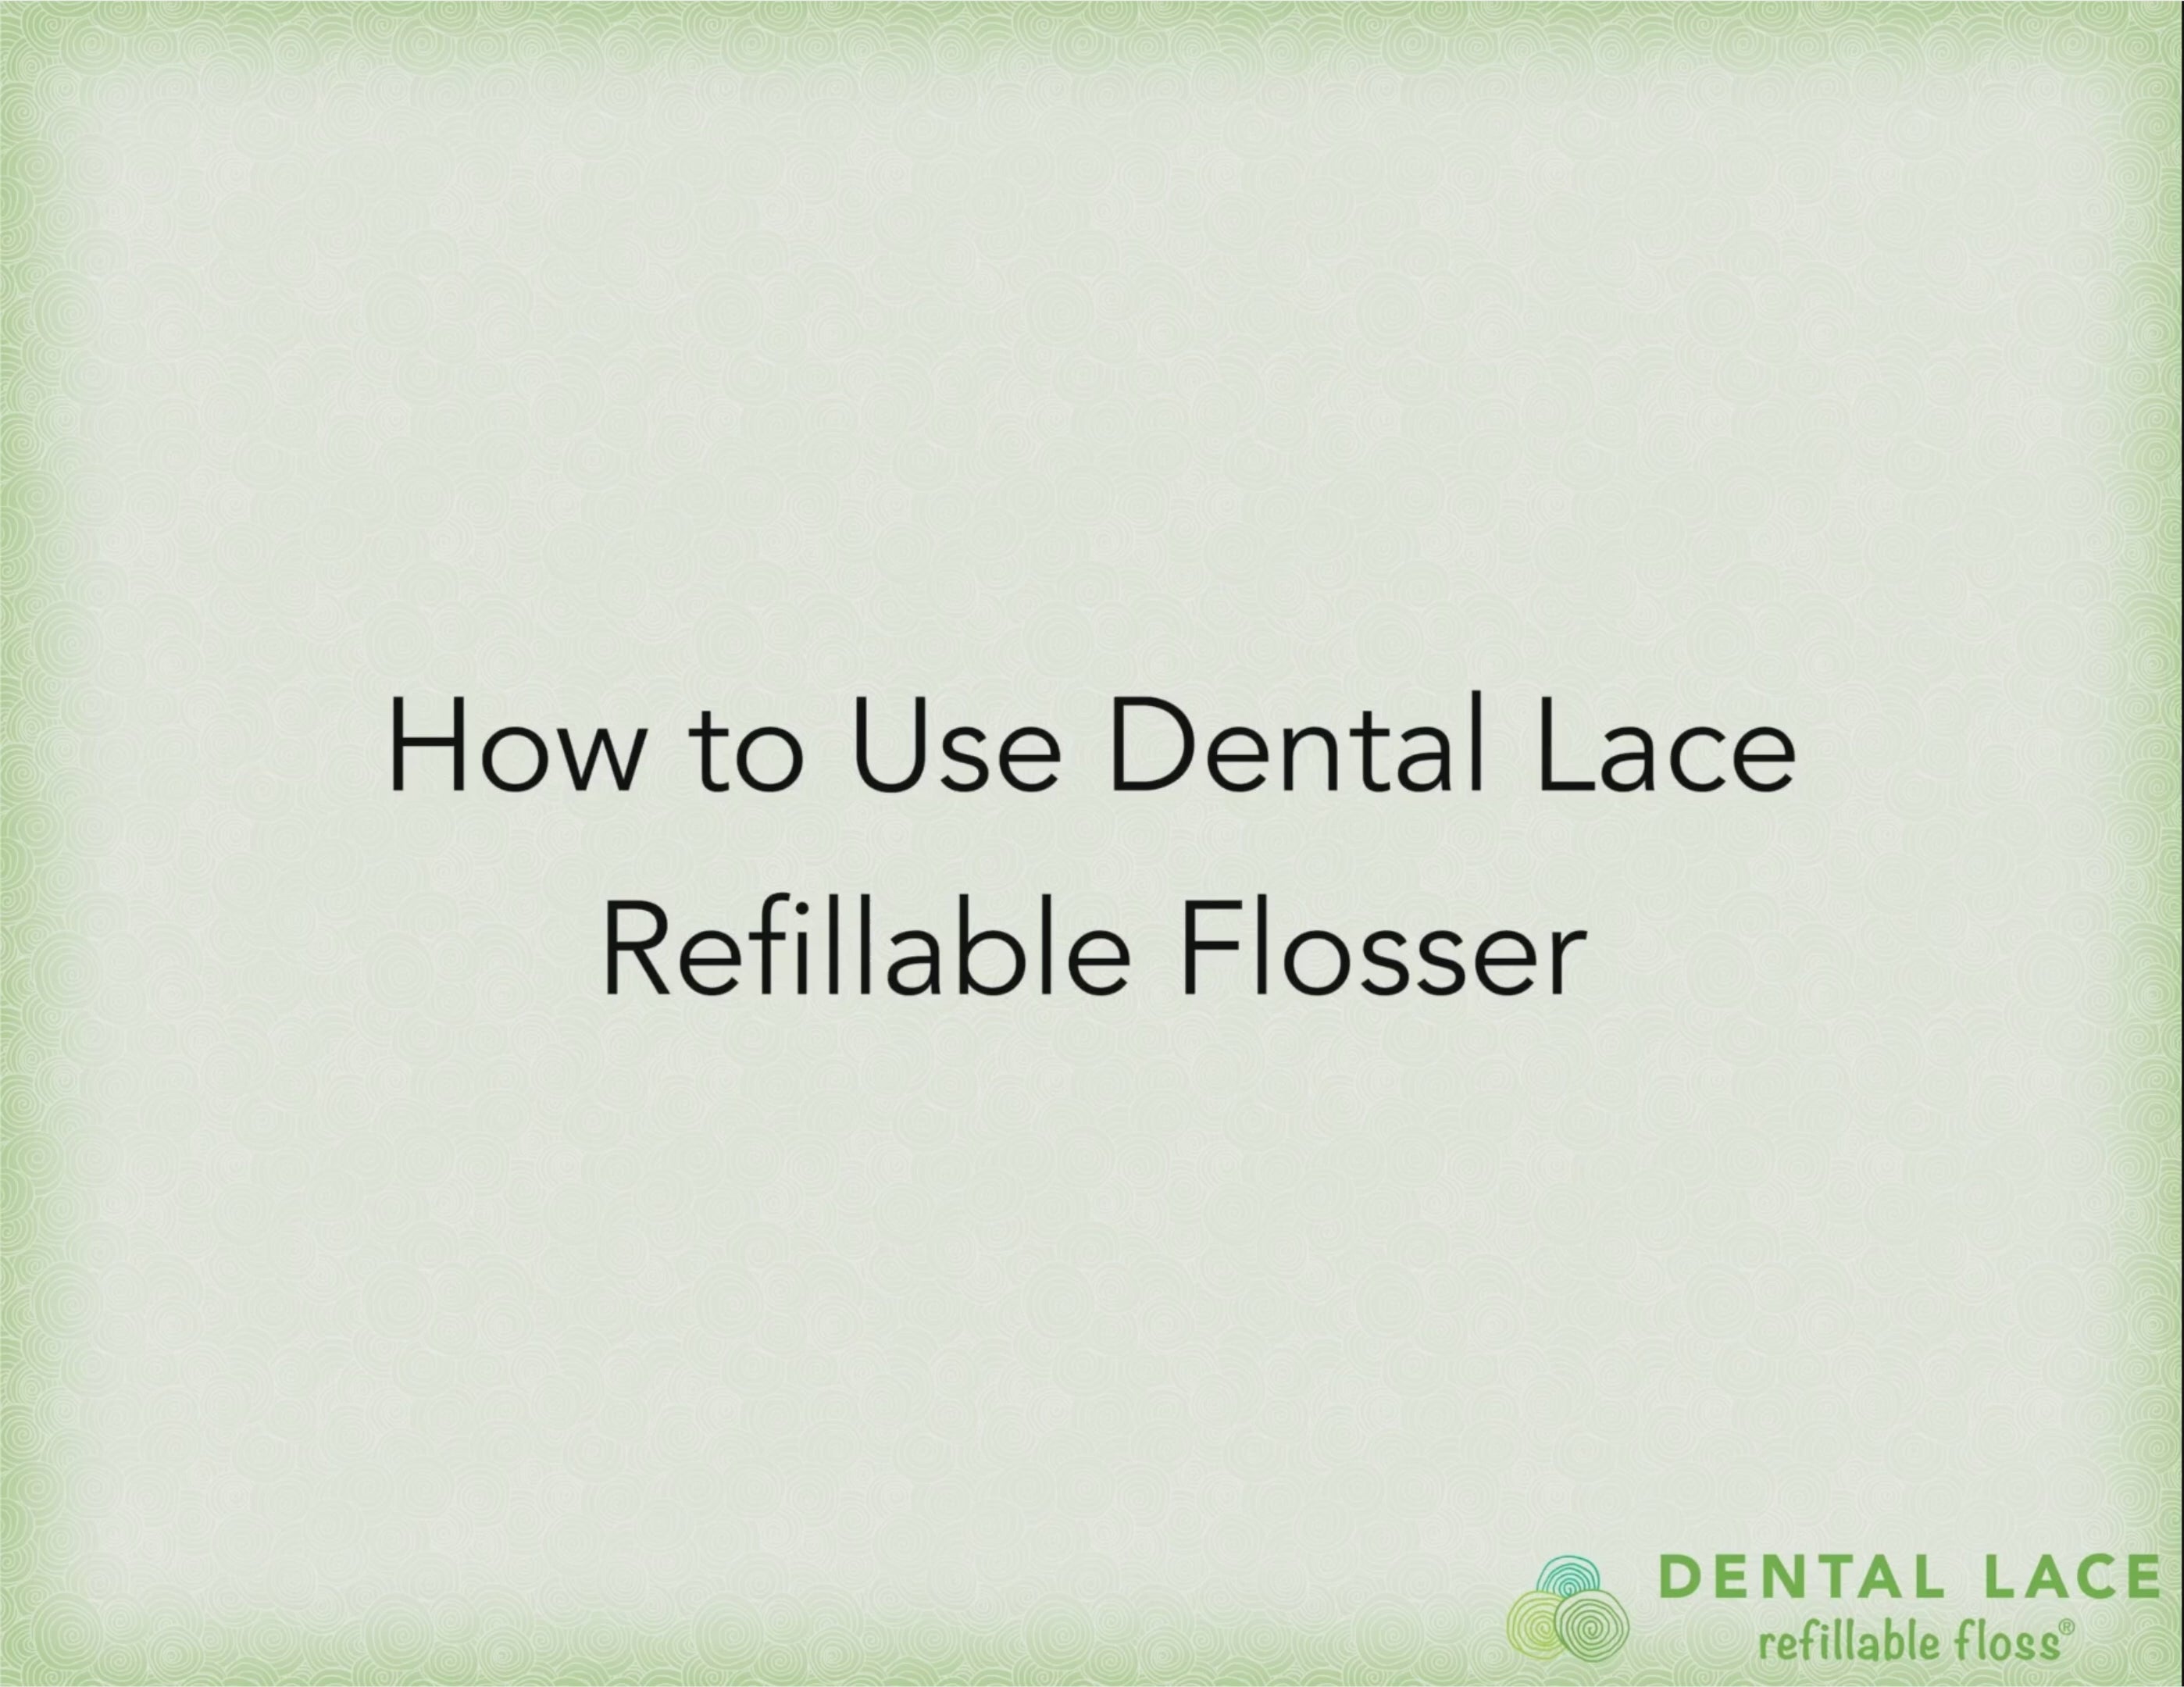 Dental Lace Refillable Flosser